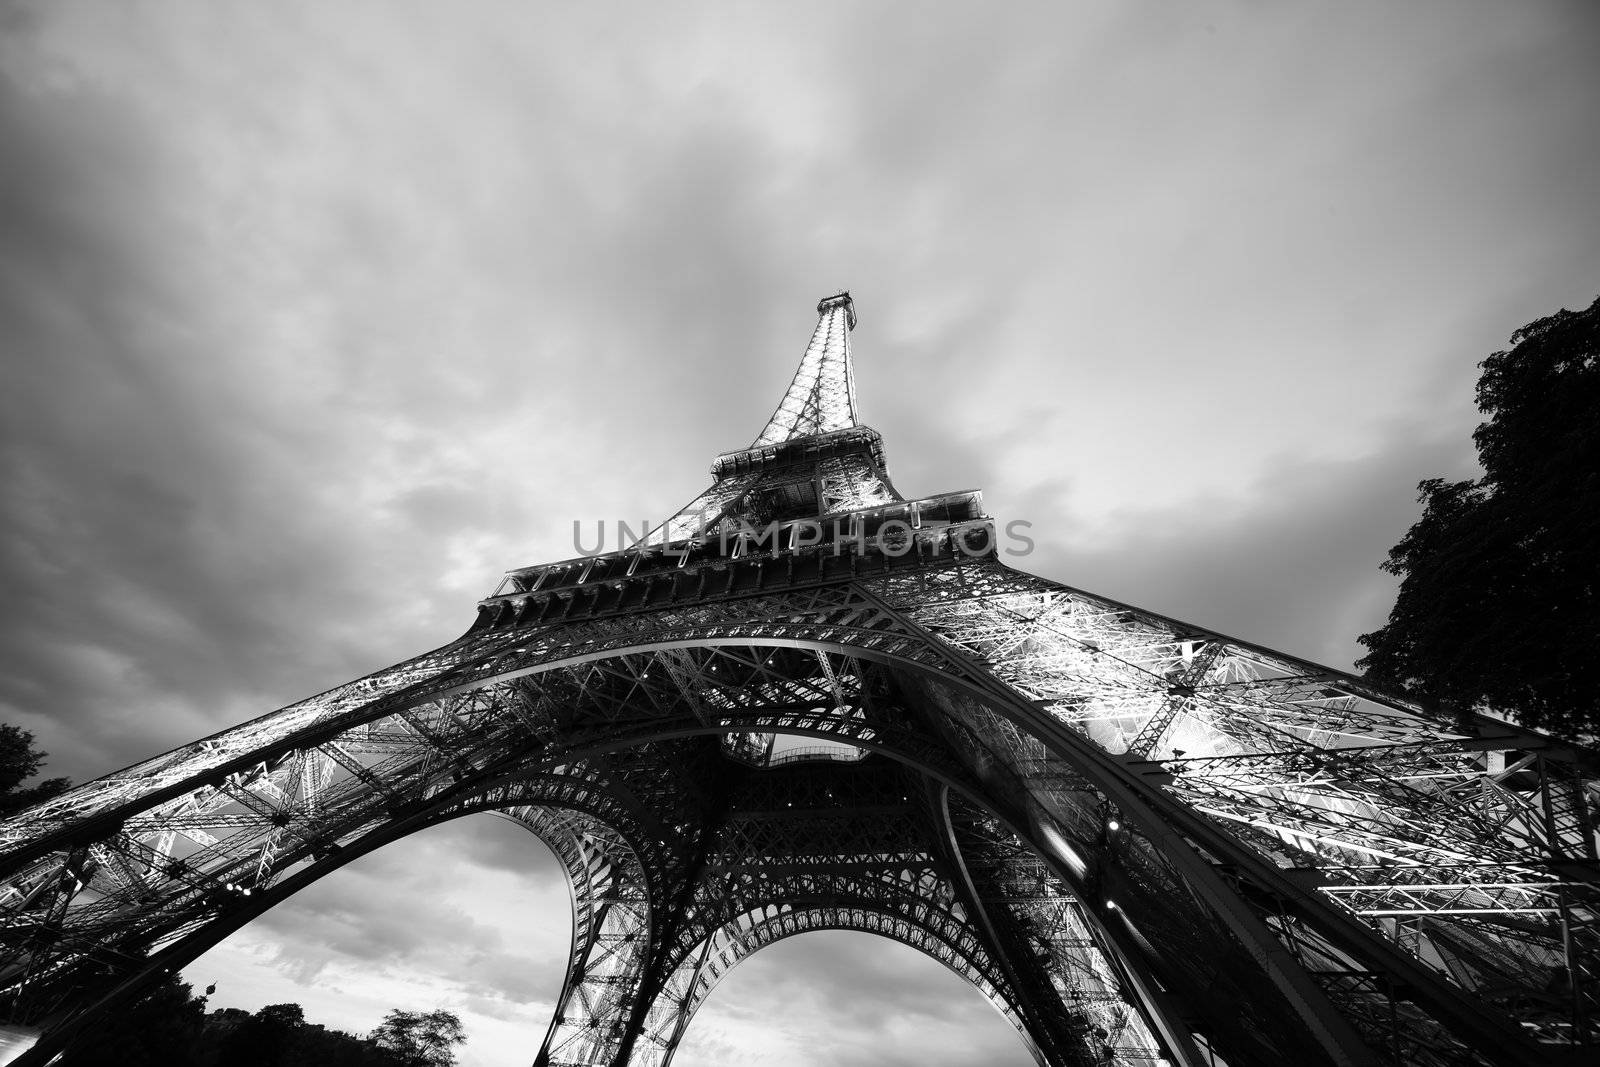 Eiffel Tower in the evening by furzyk73